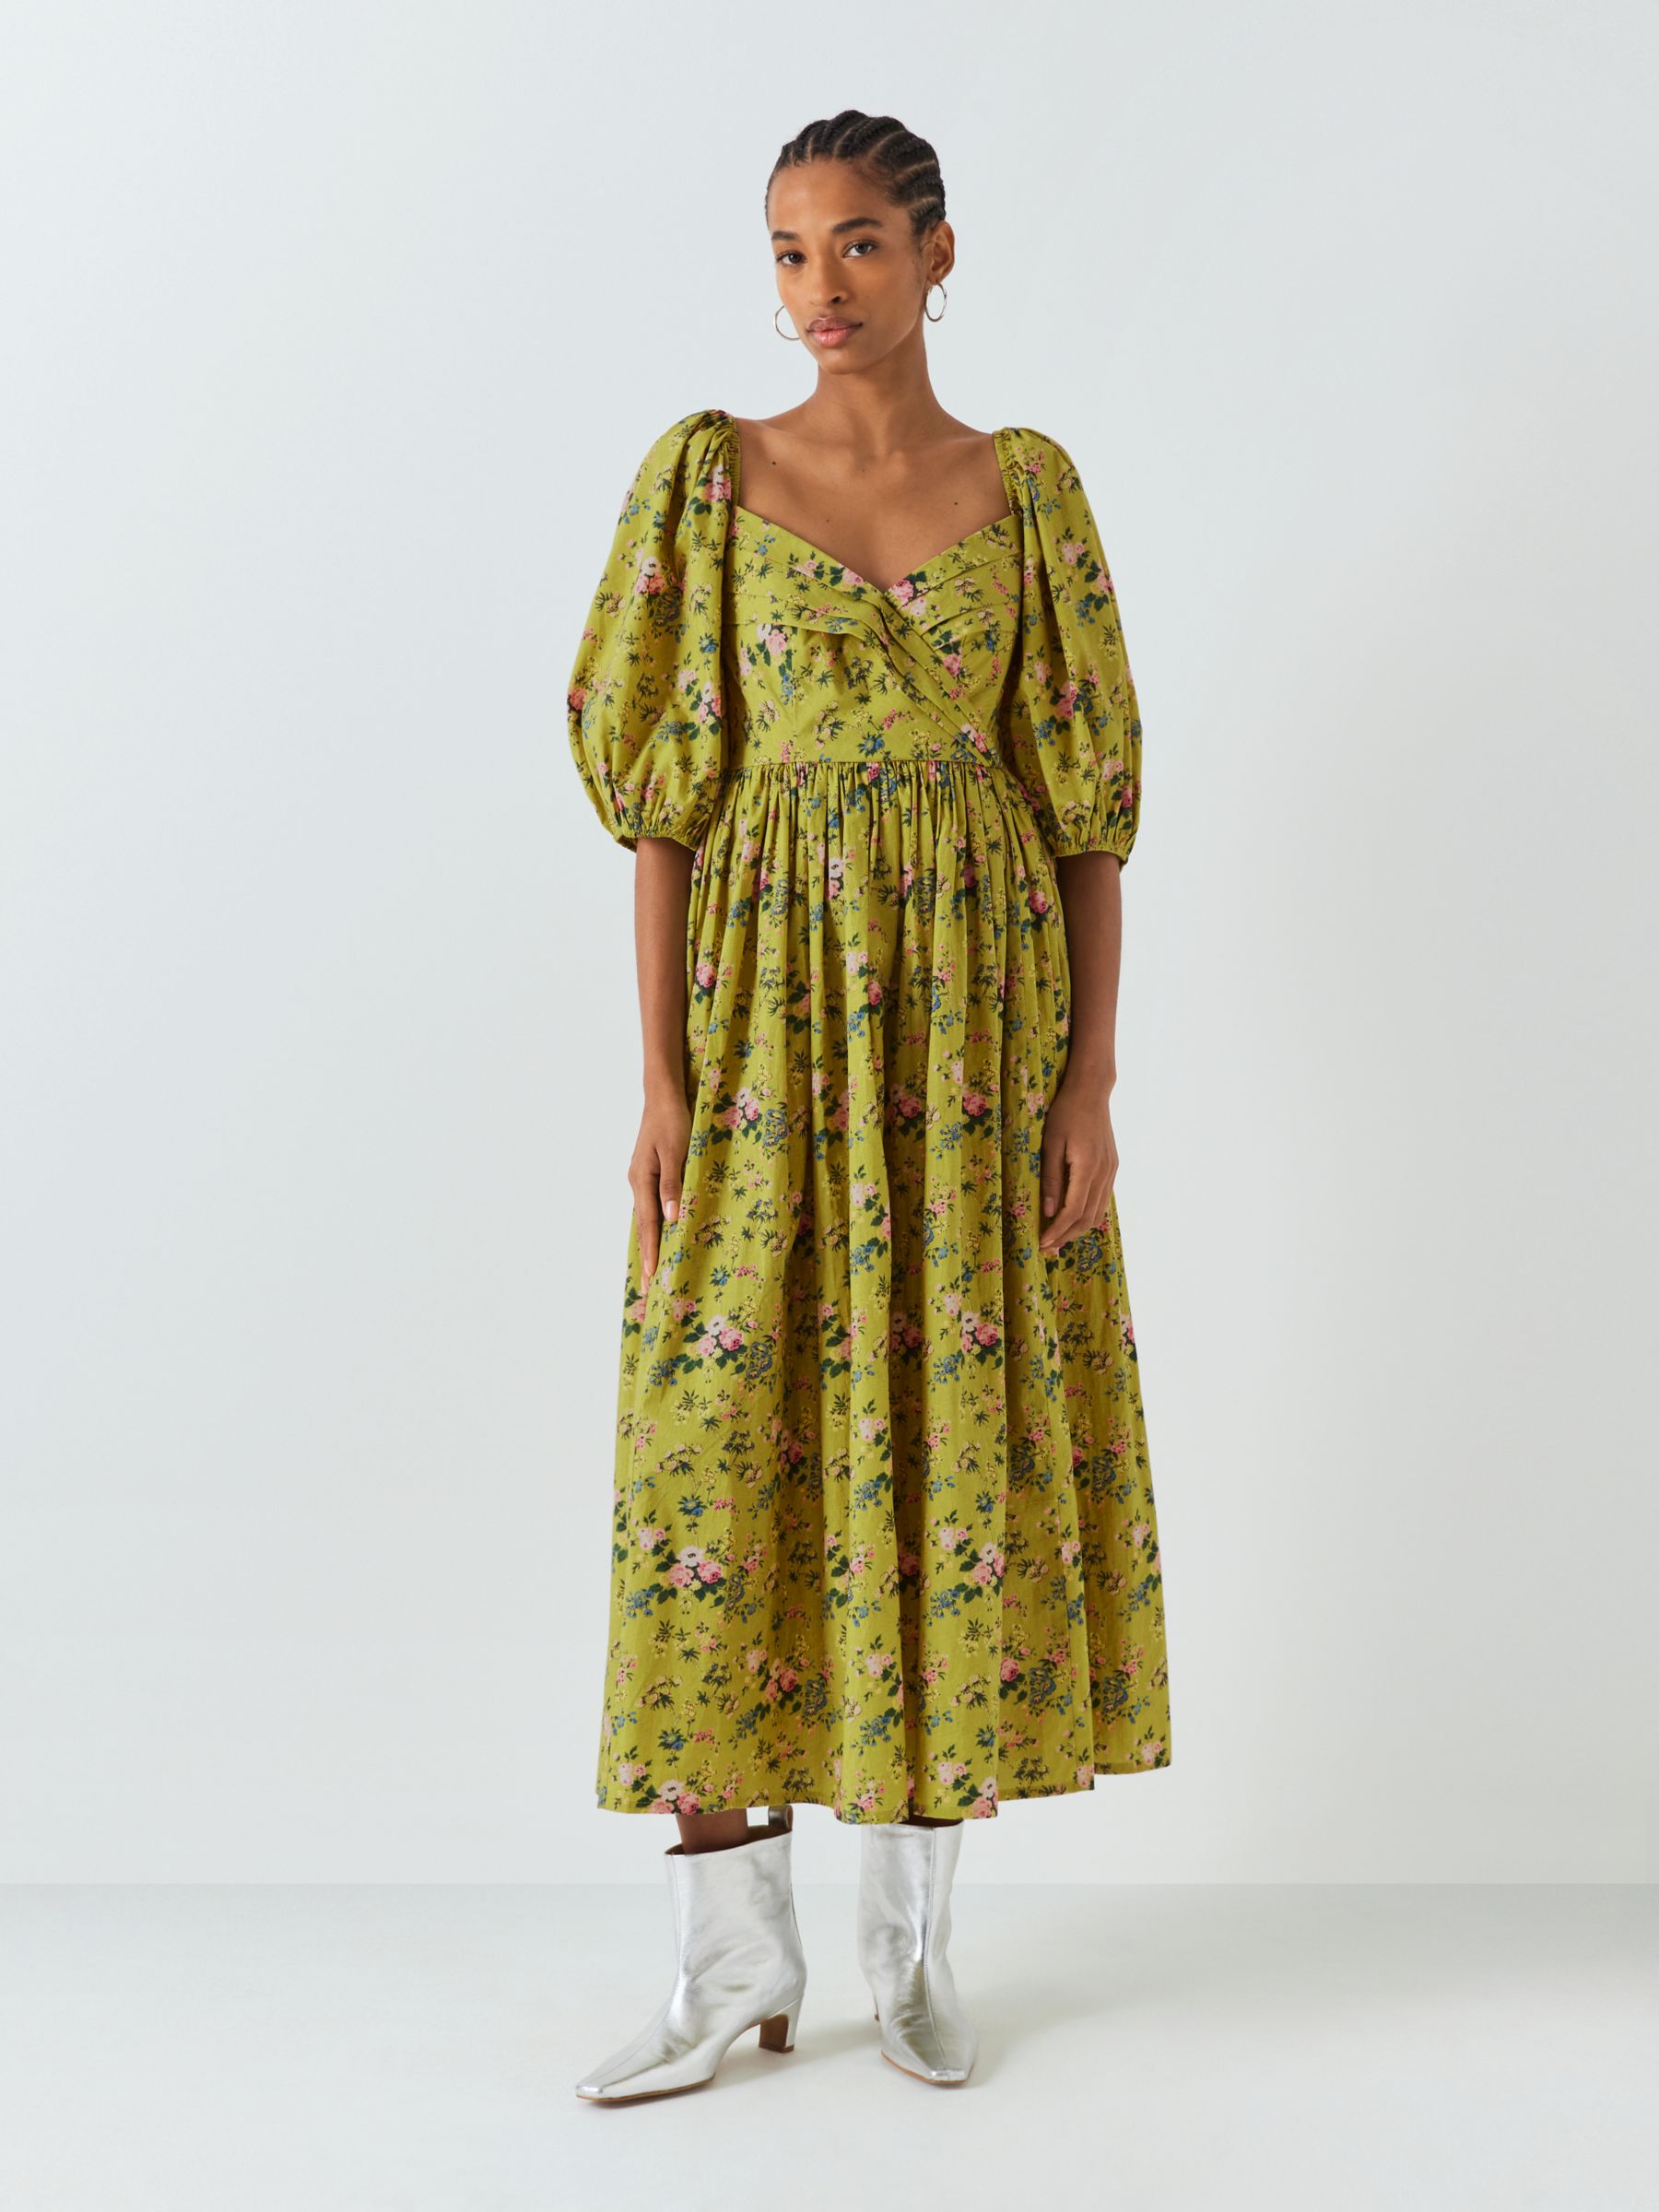 Batsheva x Laura Ashley Fells Fairford Floral Midi Dress, Yellow/Multi, 18